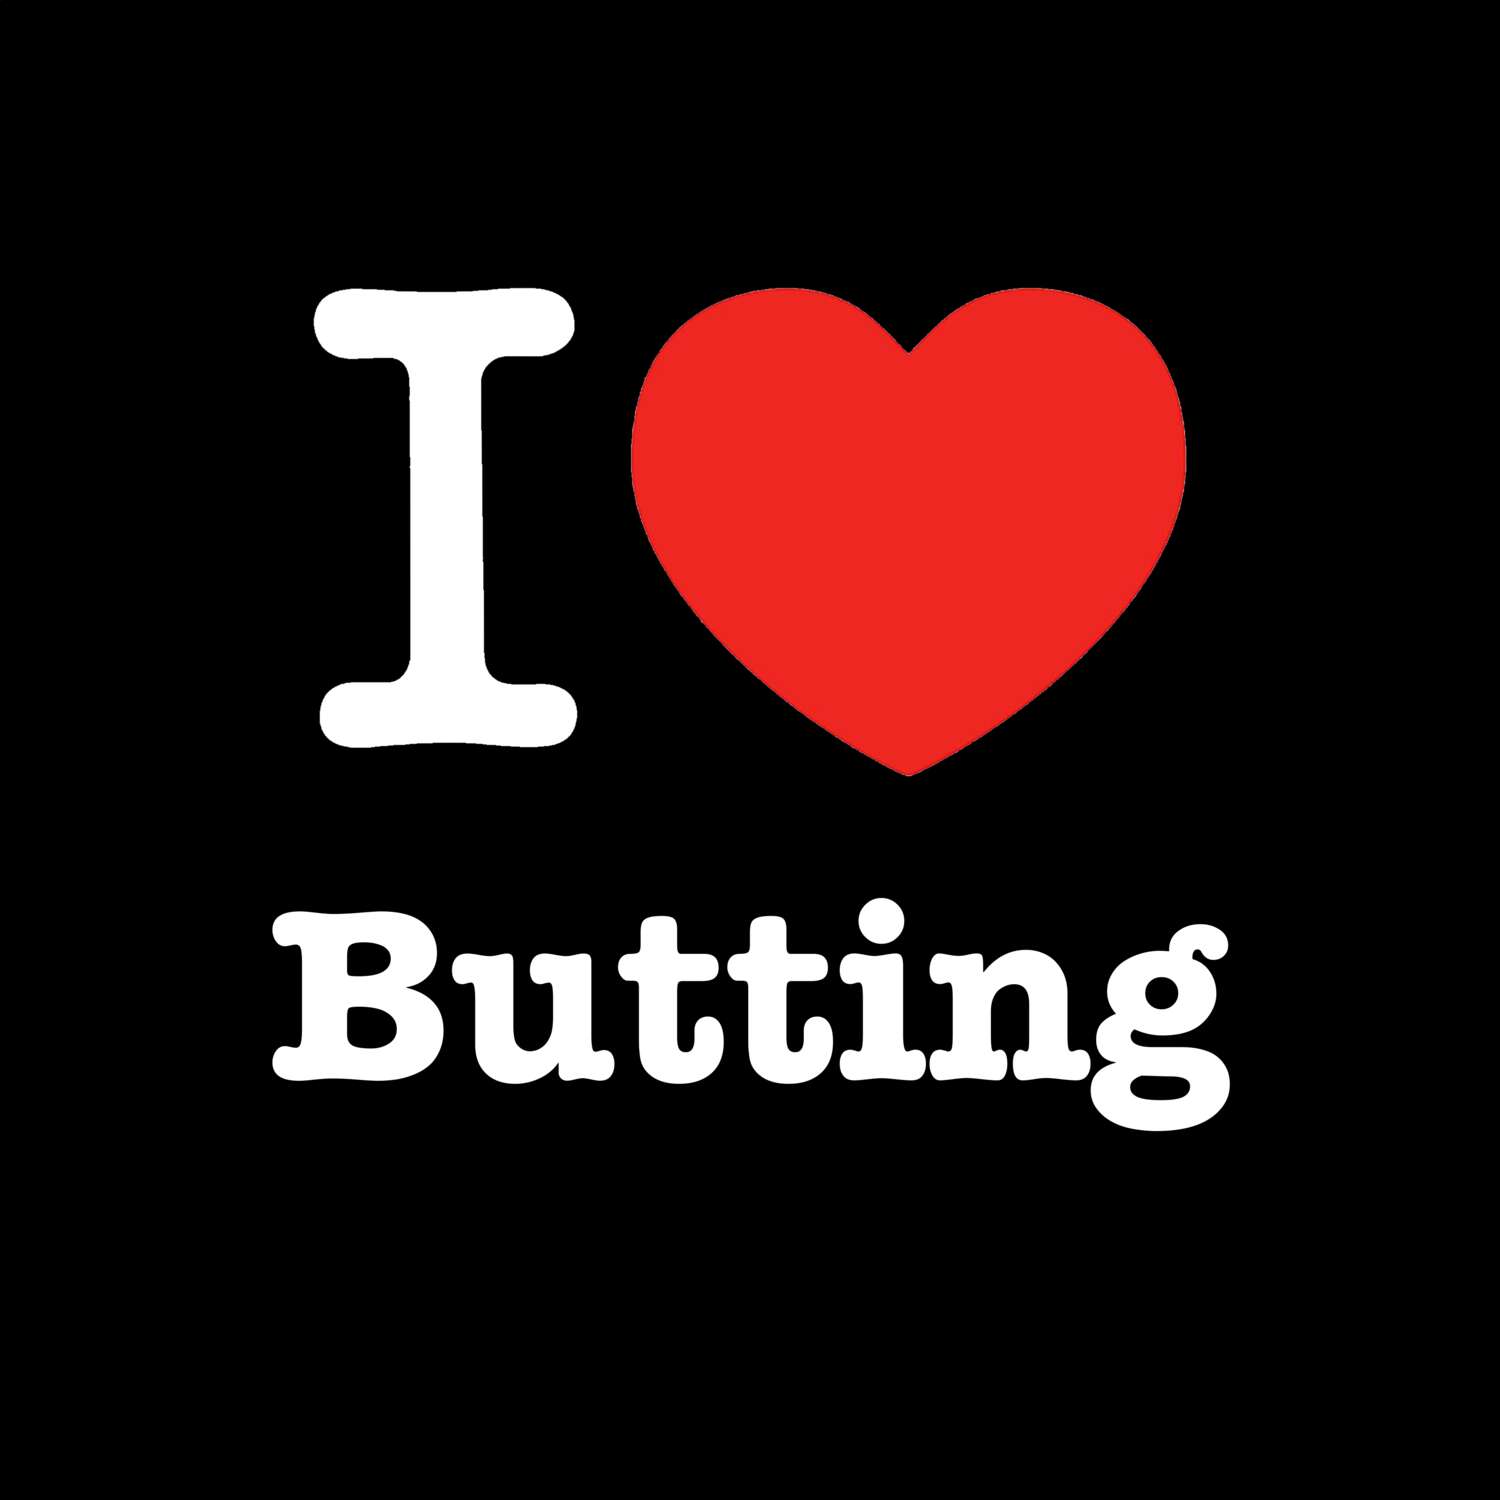 Butting T-Shirt »I love«